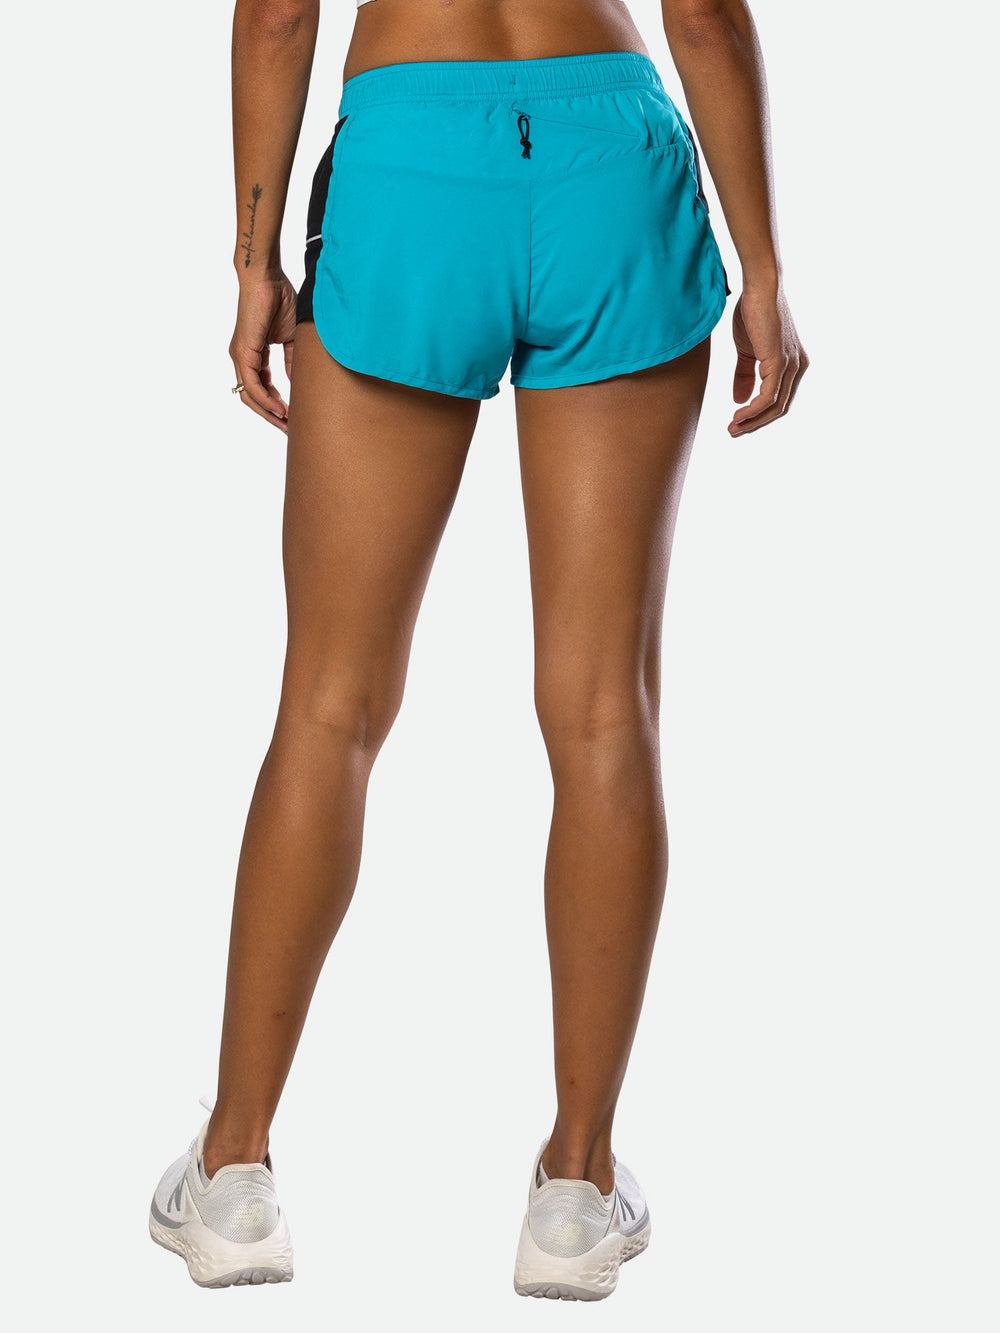 Women's Essential Shorts (Blue)